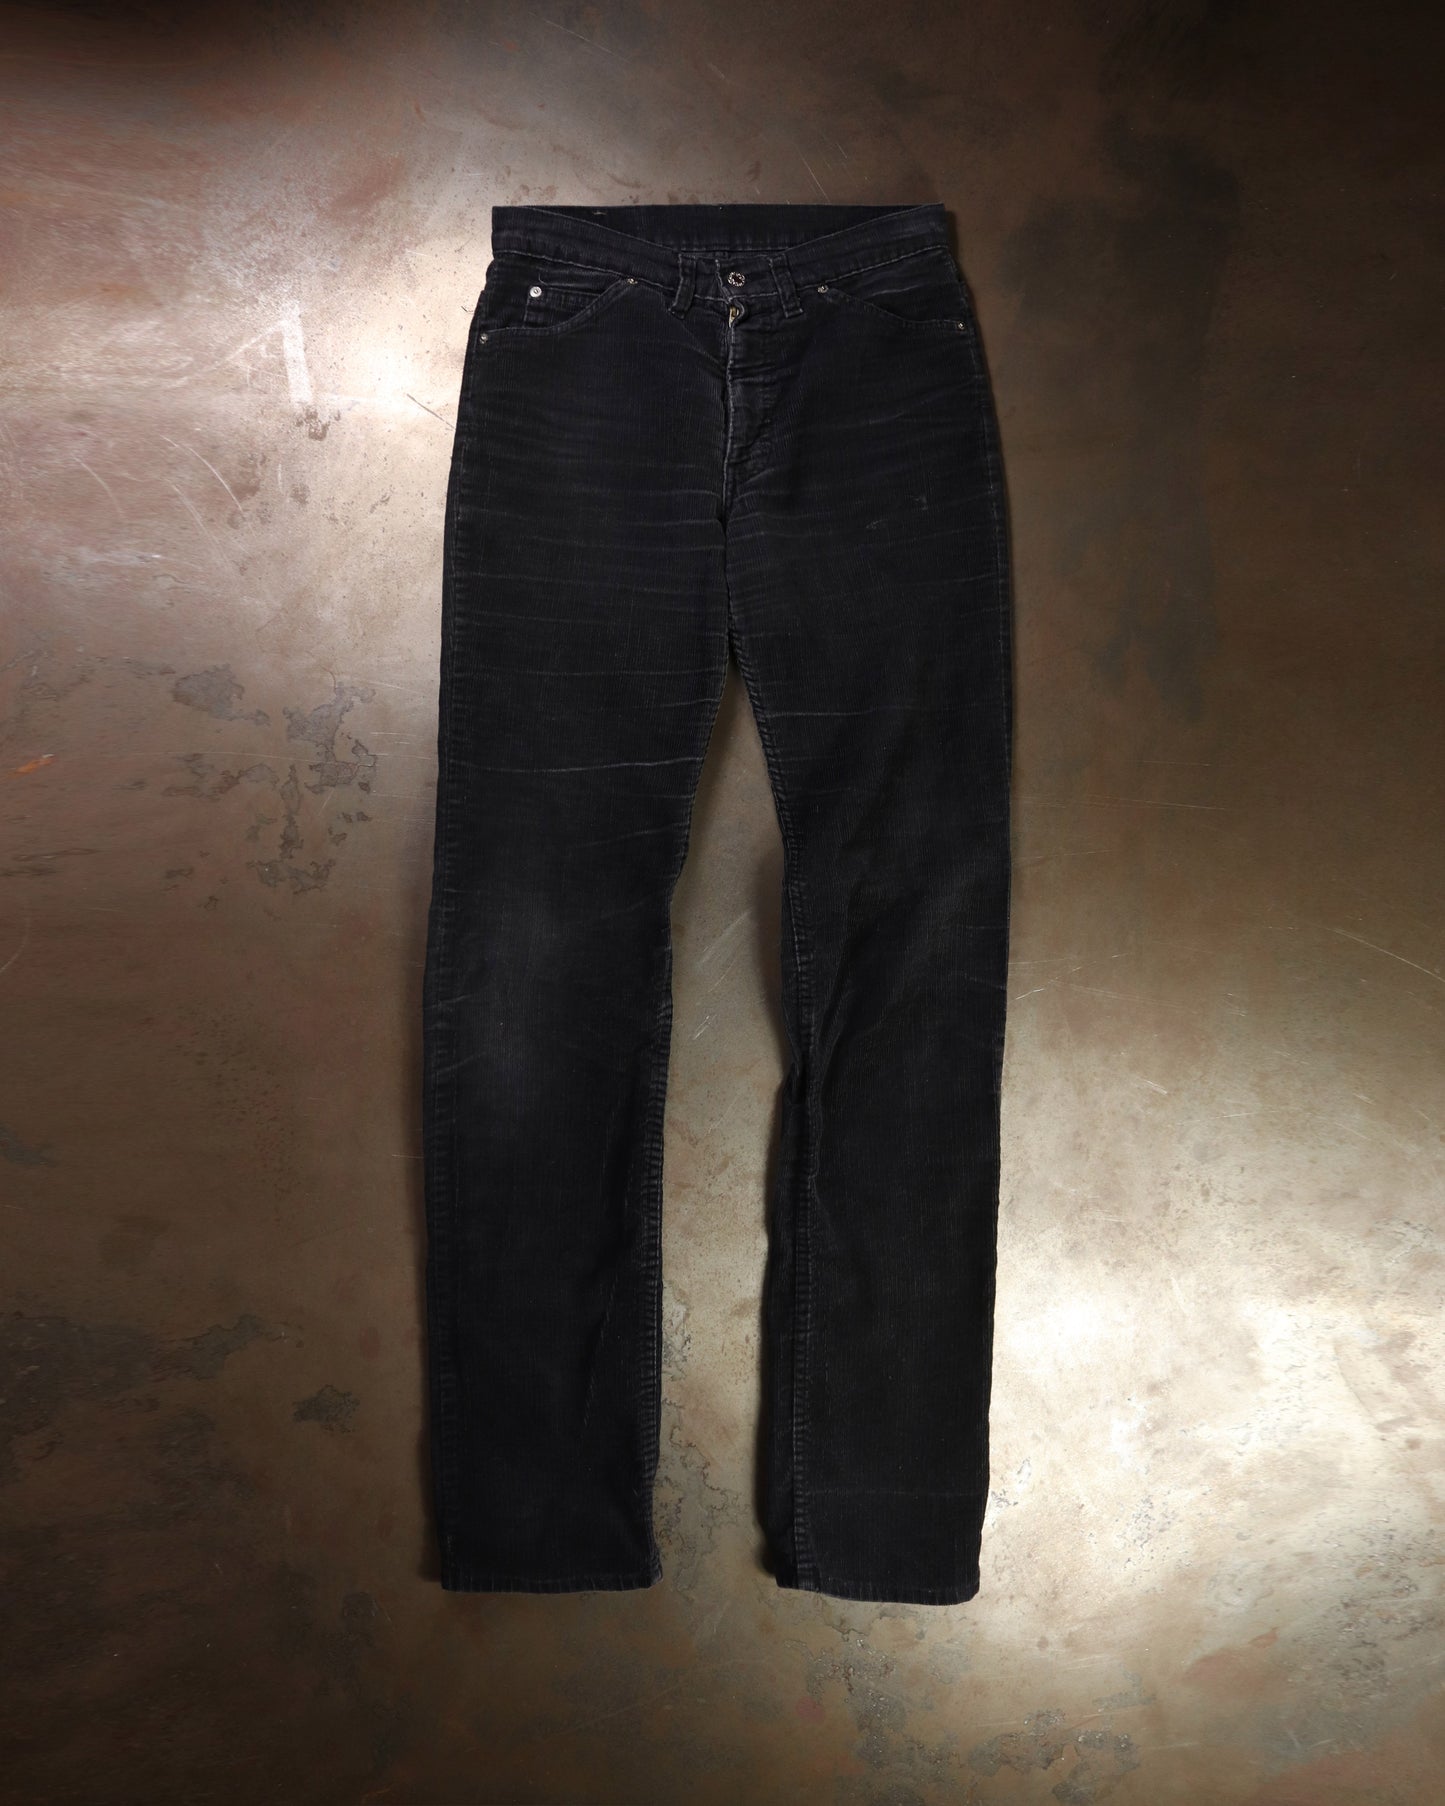 1979 Levi’s corduroy jeans